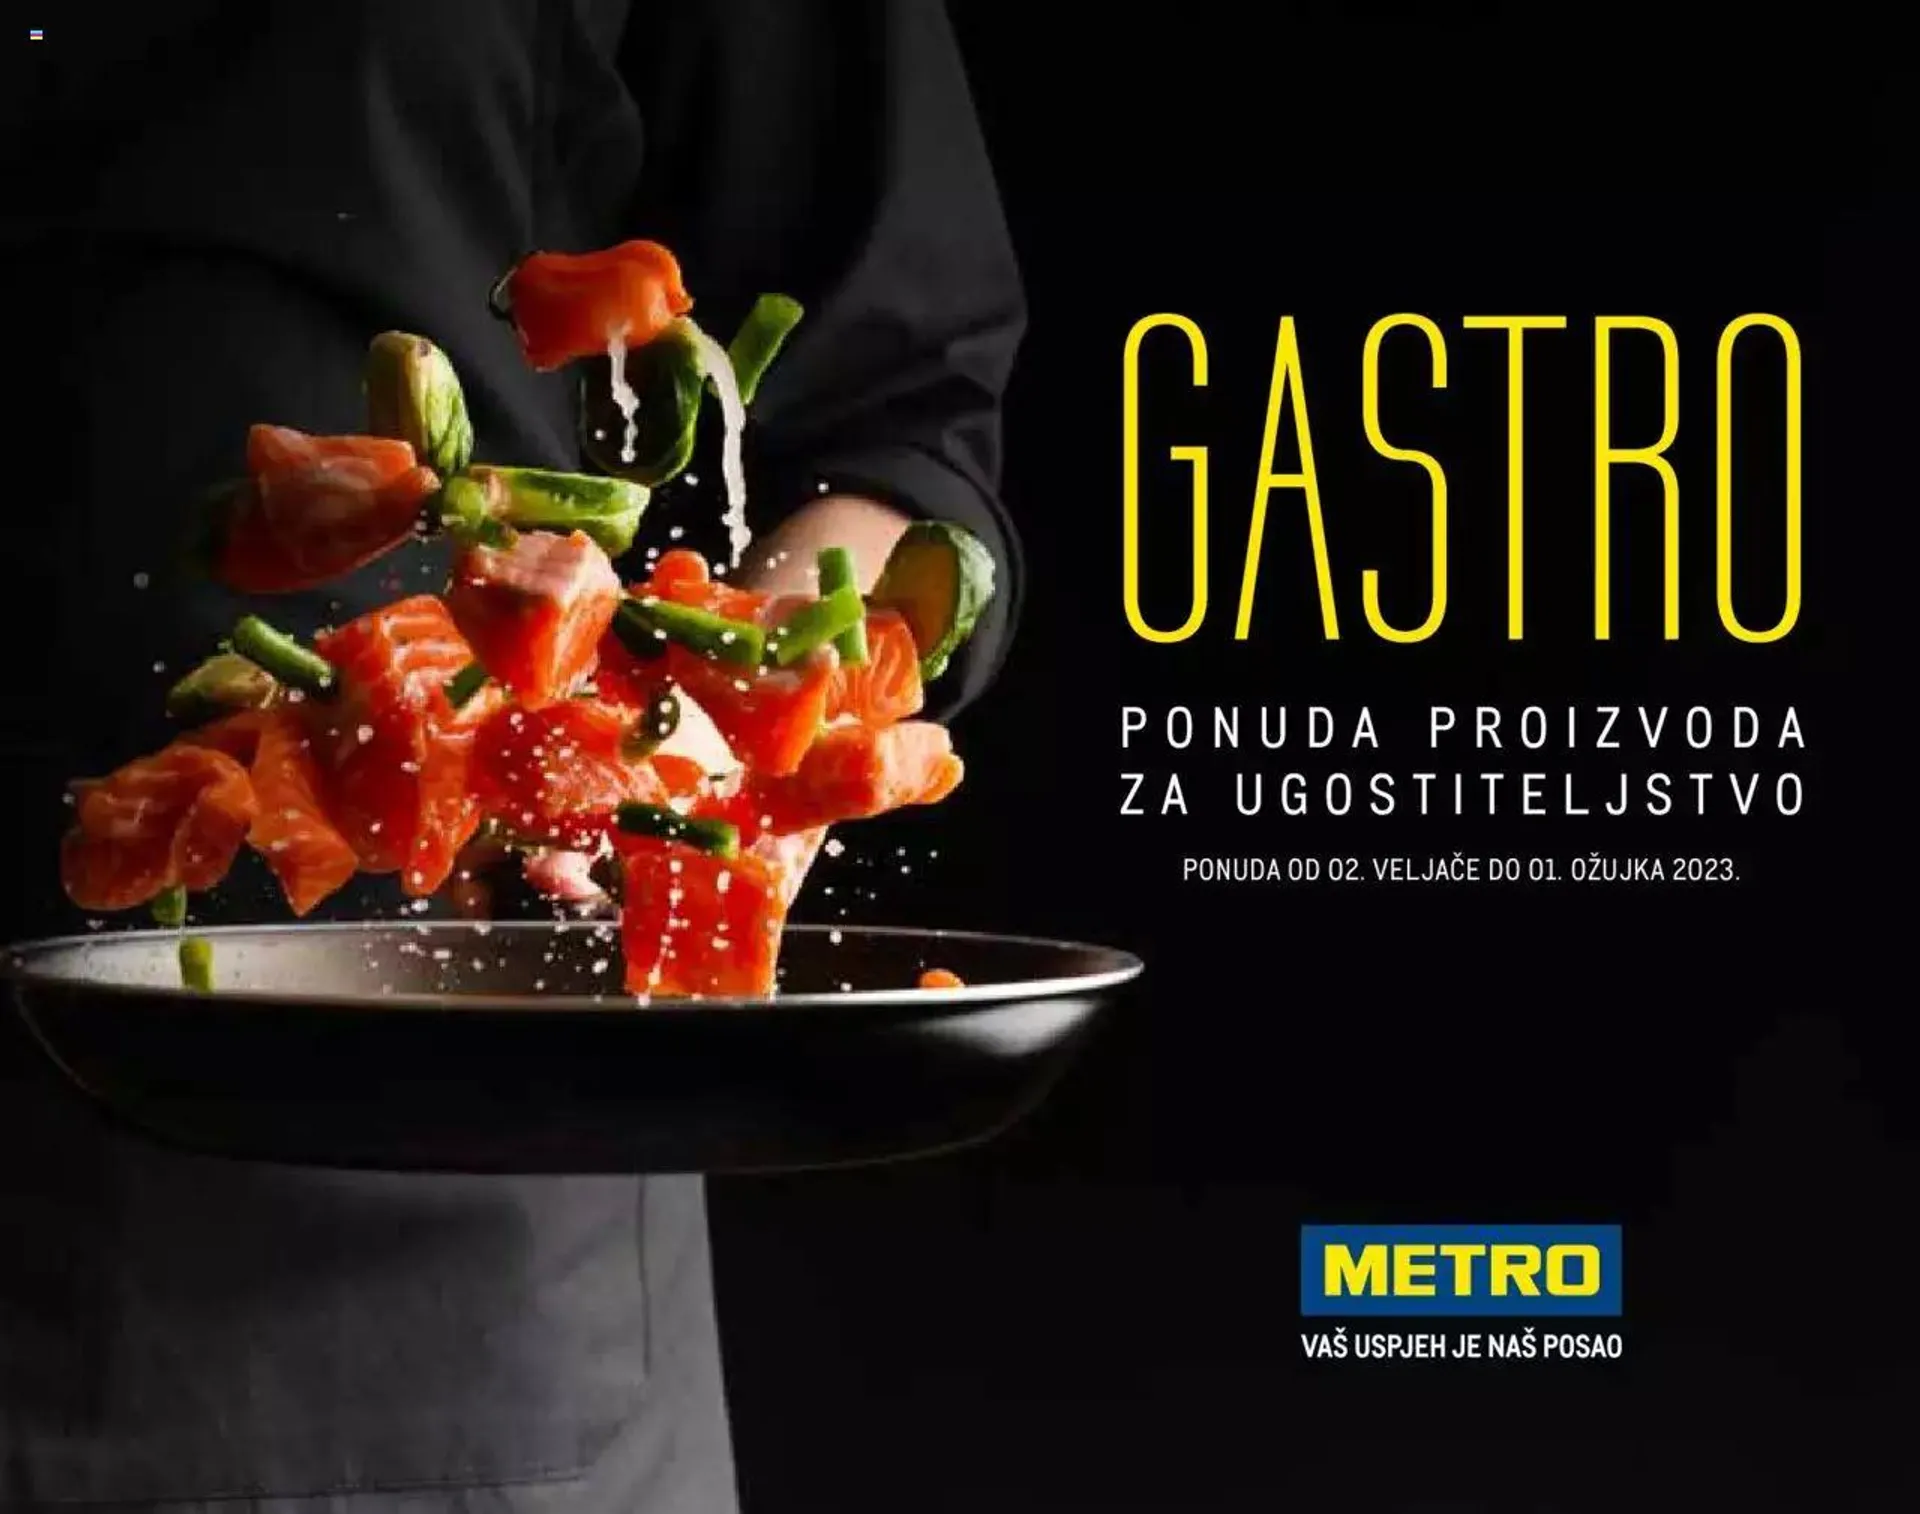 Metro - Gastro ponuda za ugostitelje - 0